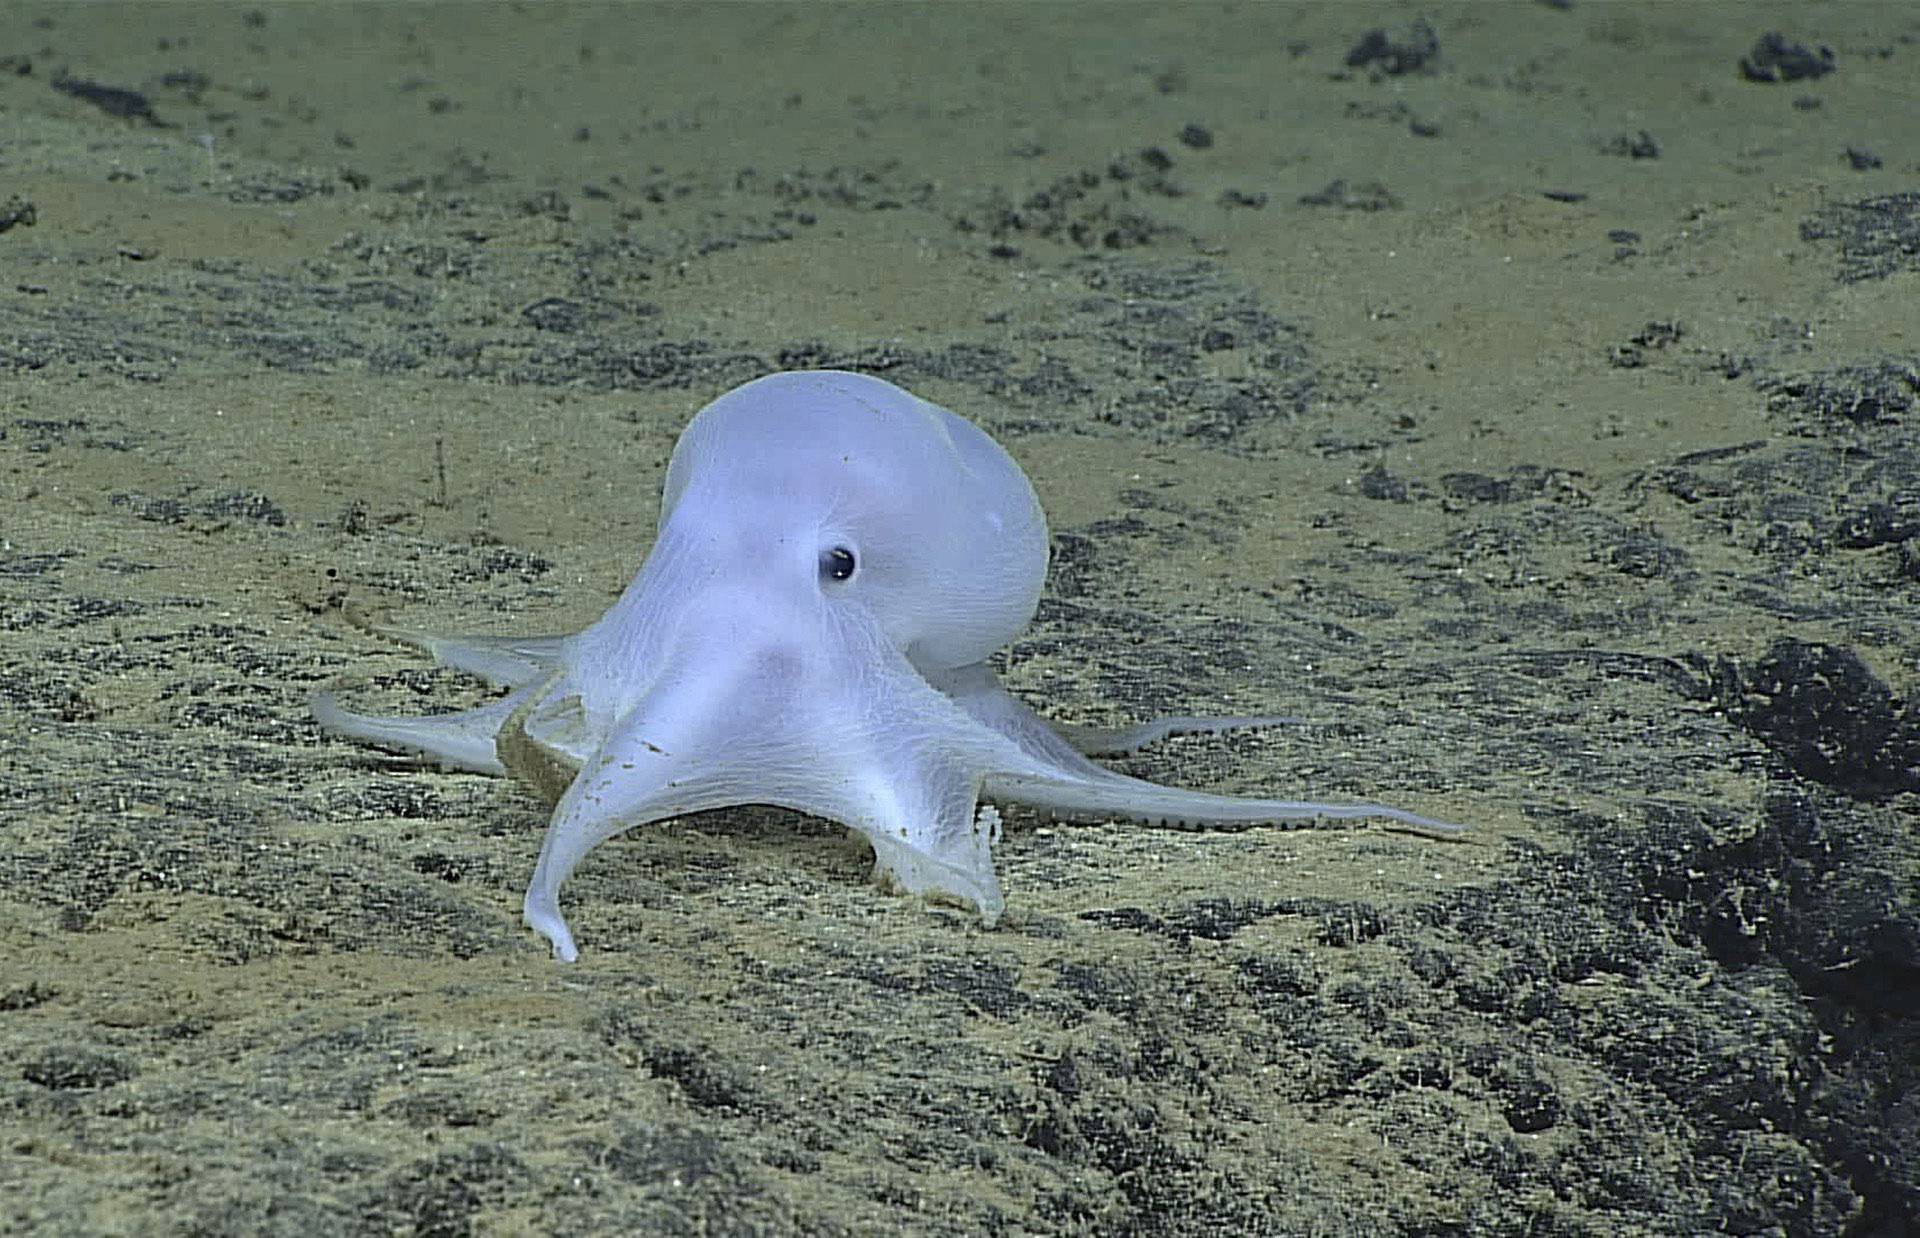 Nova vrsta hobotnice odmah dobila ime po duhu Casperu